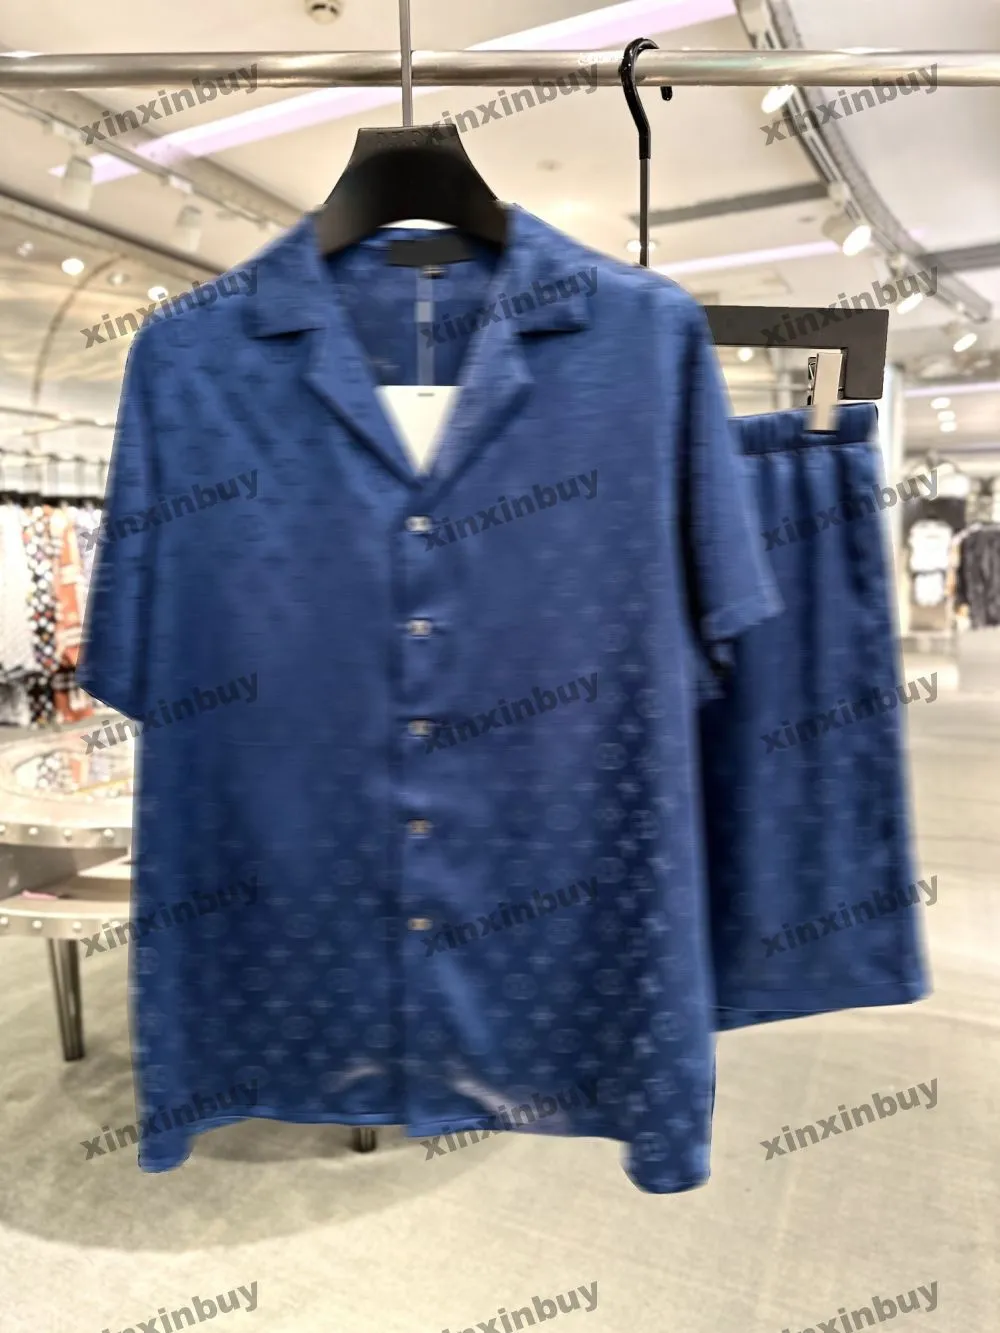 Xinxinbuy Männer Designer Tee T-Shirt 2024 Italien dunkel gemusterte Jacquard Buchstabe Stoff Seidensets Langarm Baumwoll Frauen grau schwarz blau s-4xl